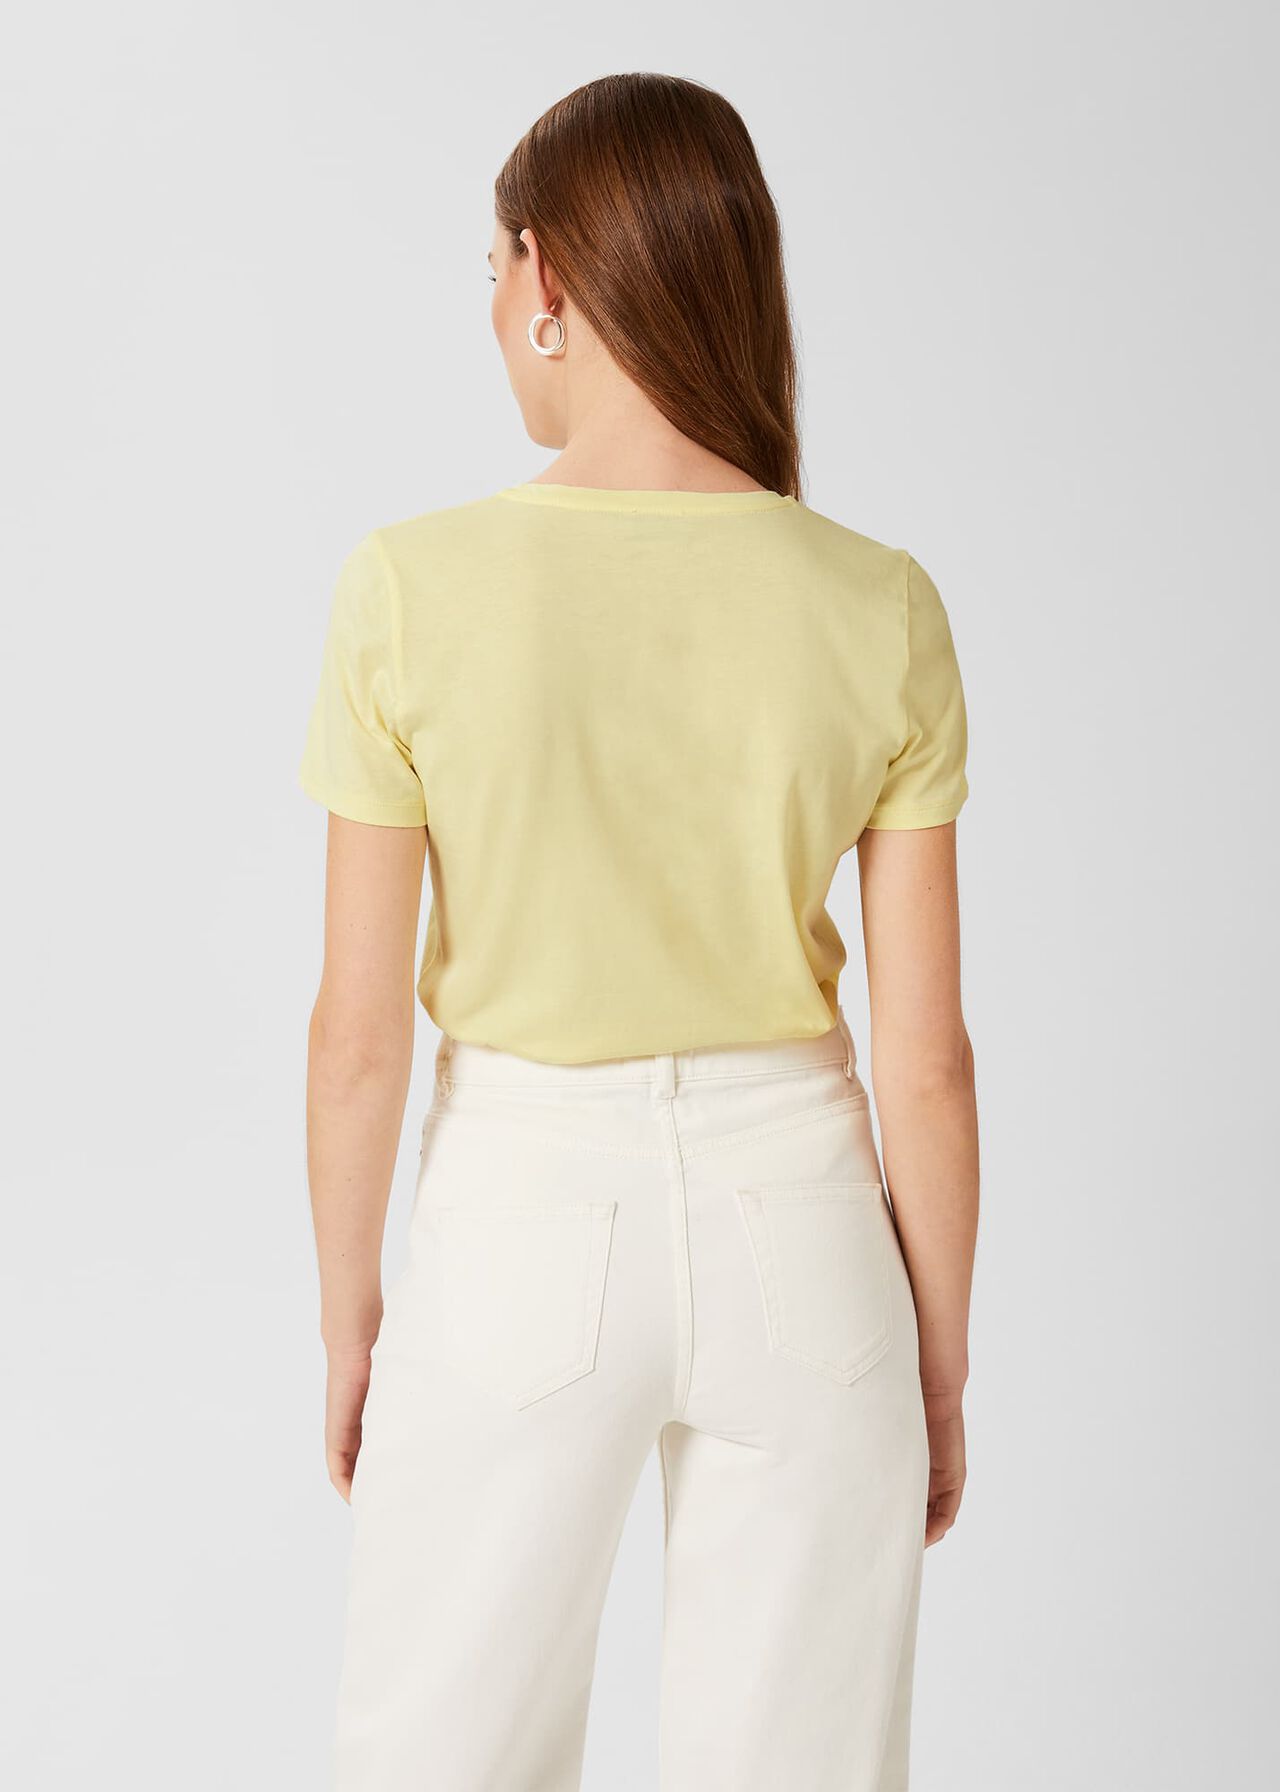 Pixie Cotton T-Shirt, Light Yellow, hi-res